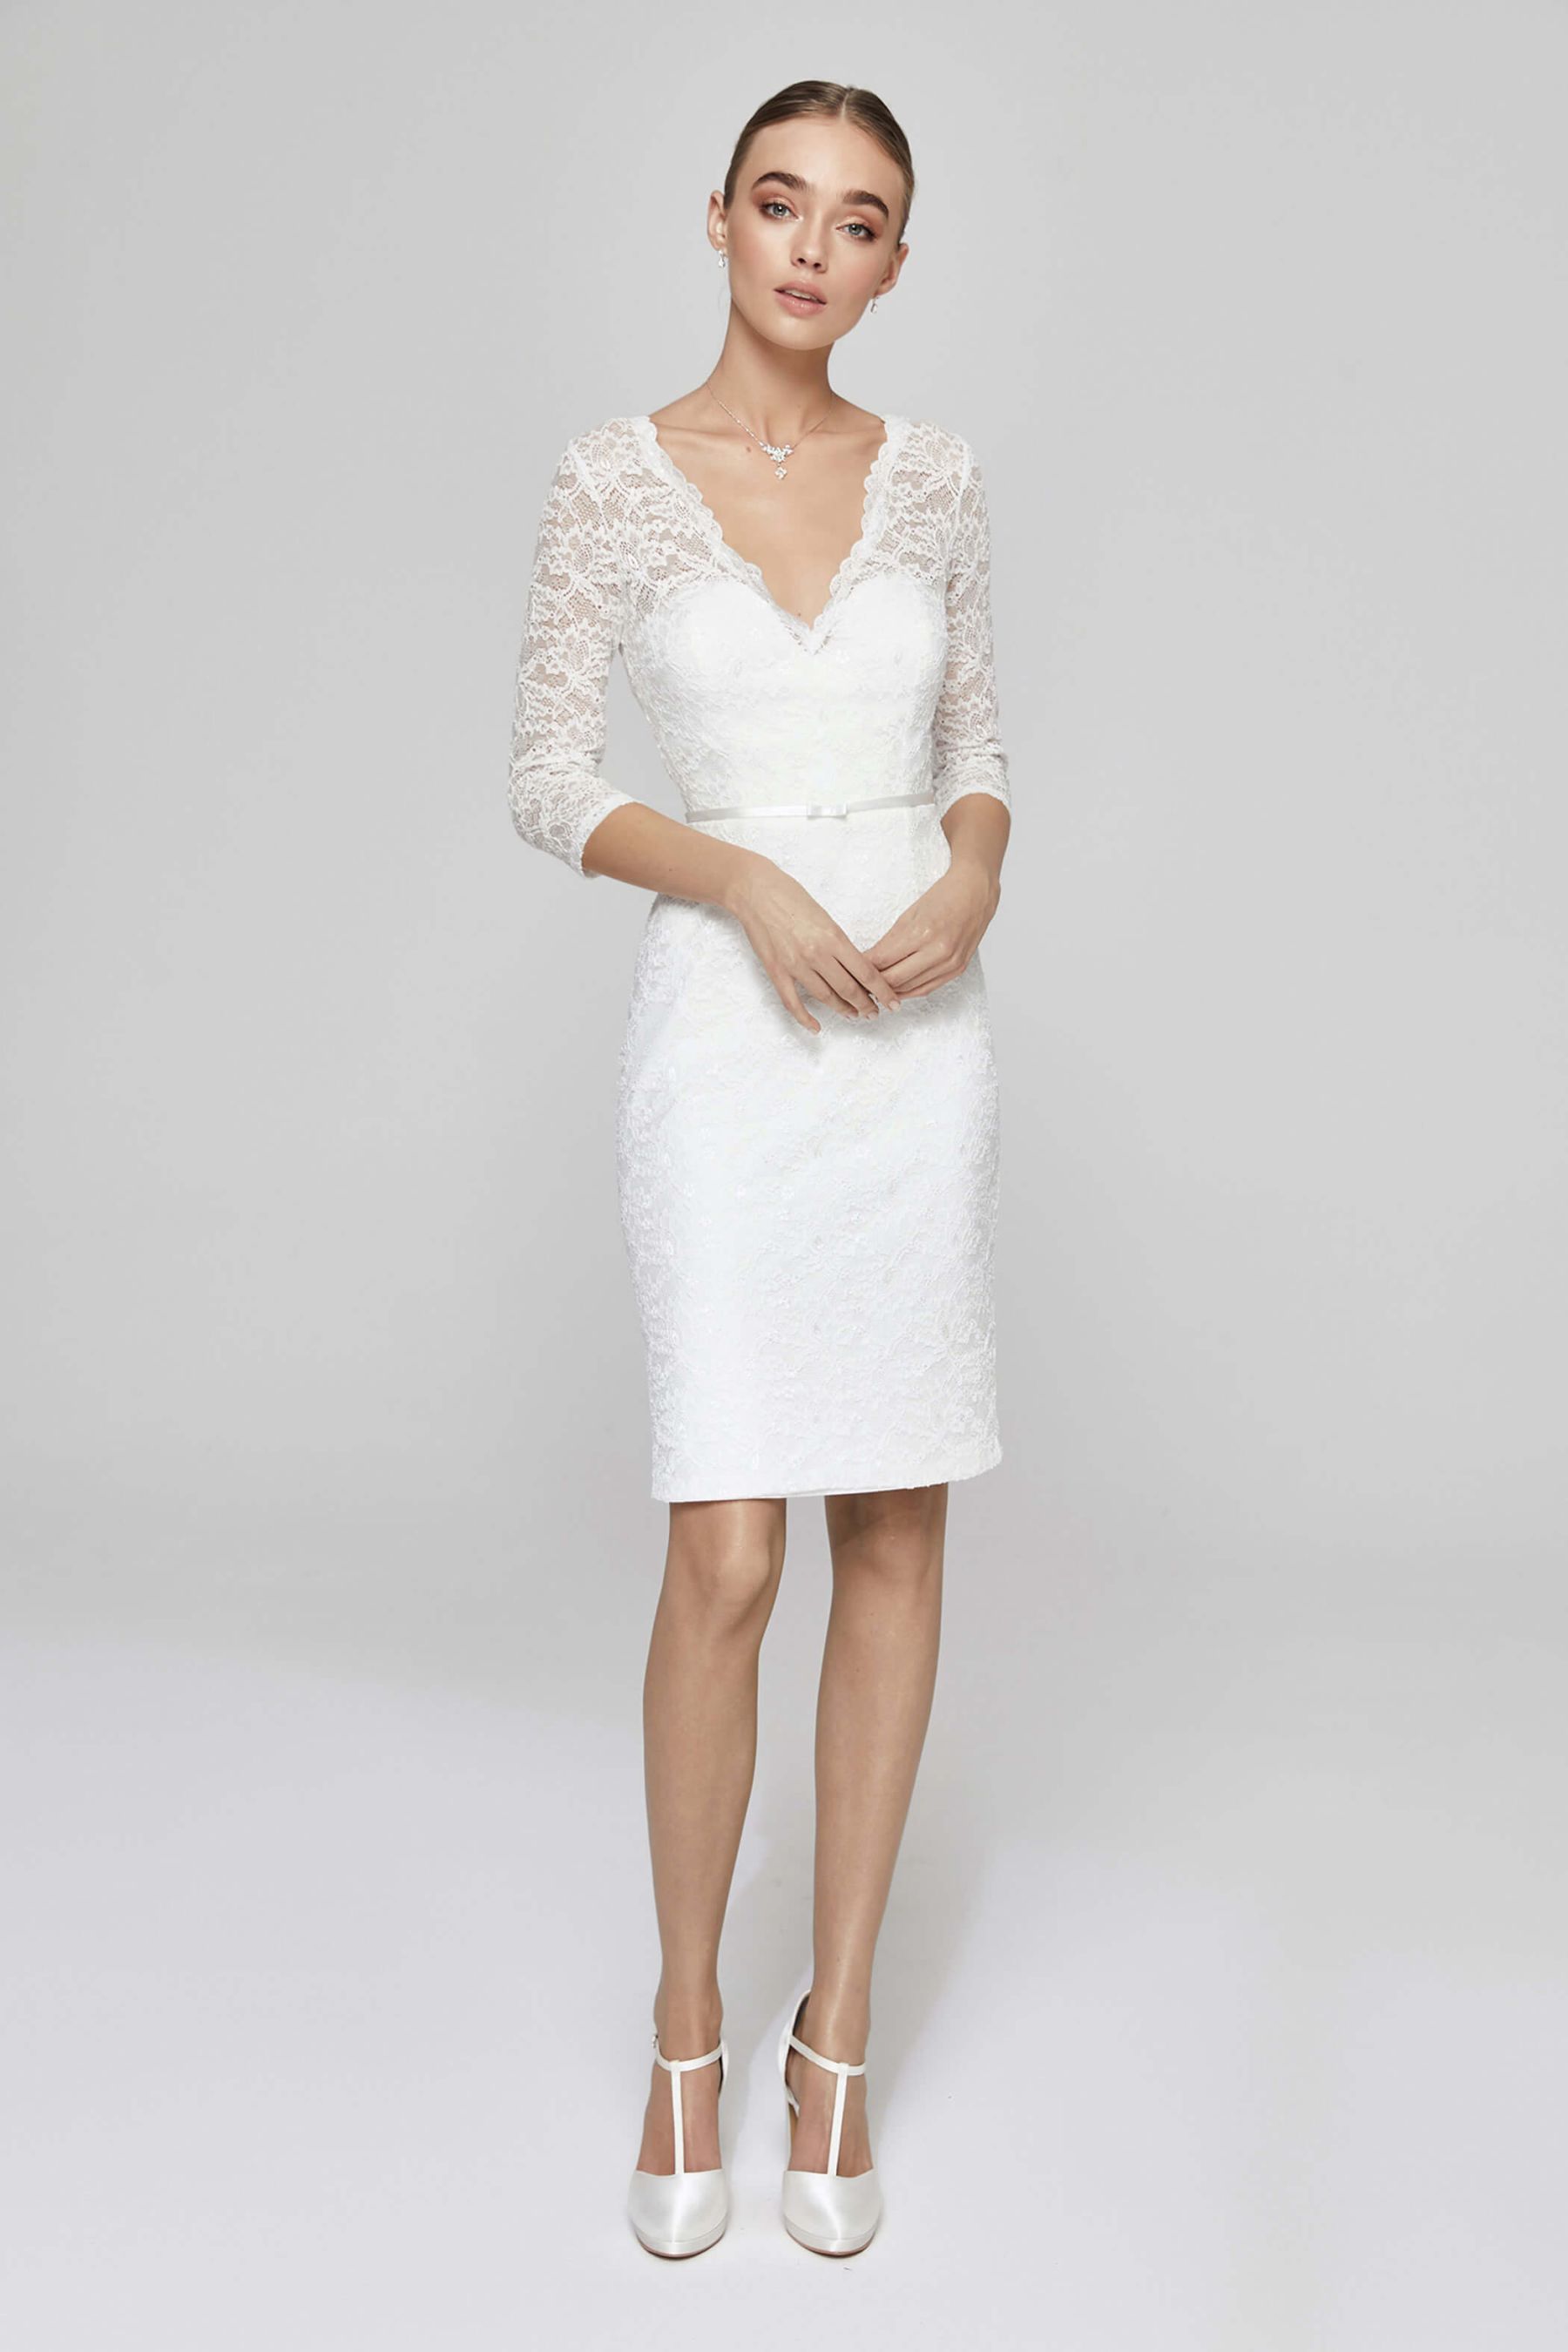 Bride Now: Stunning V-neck 3/4th sleeved short lace wedding dress